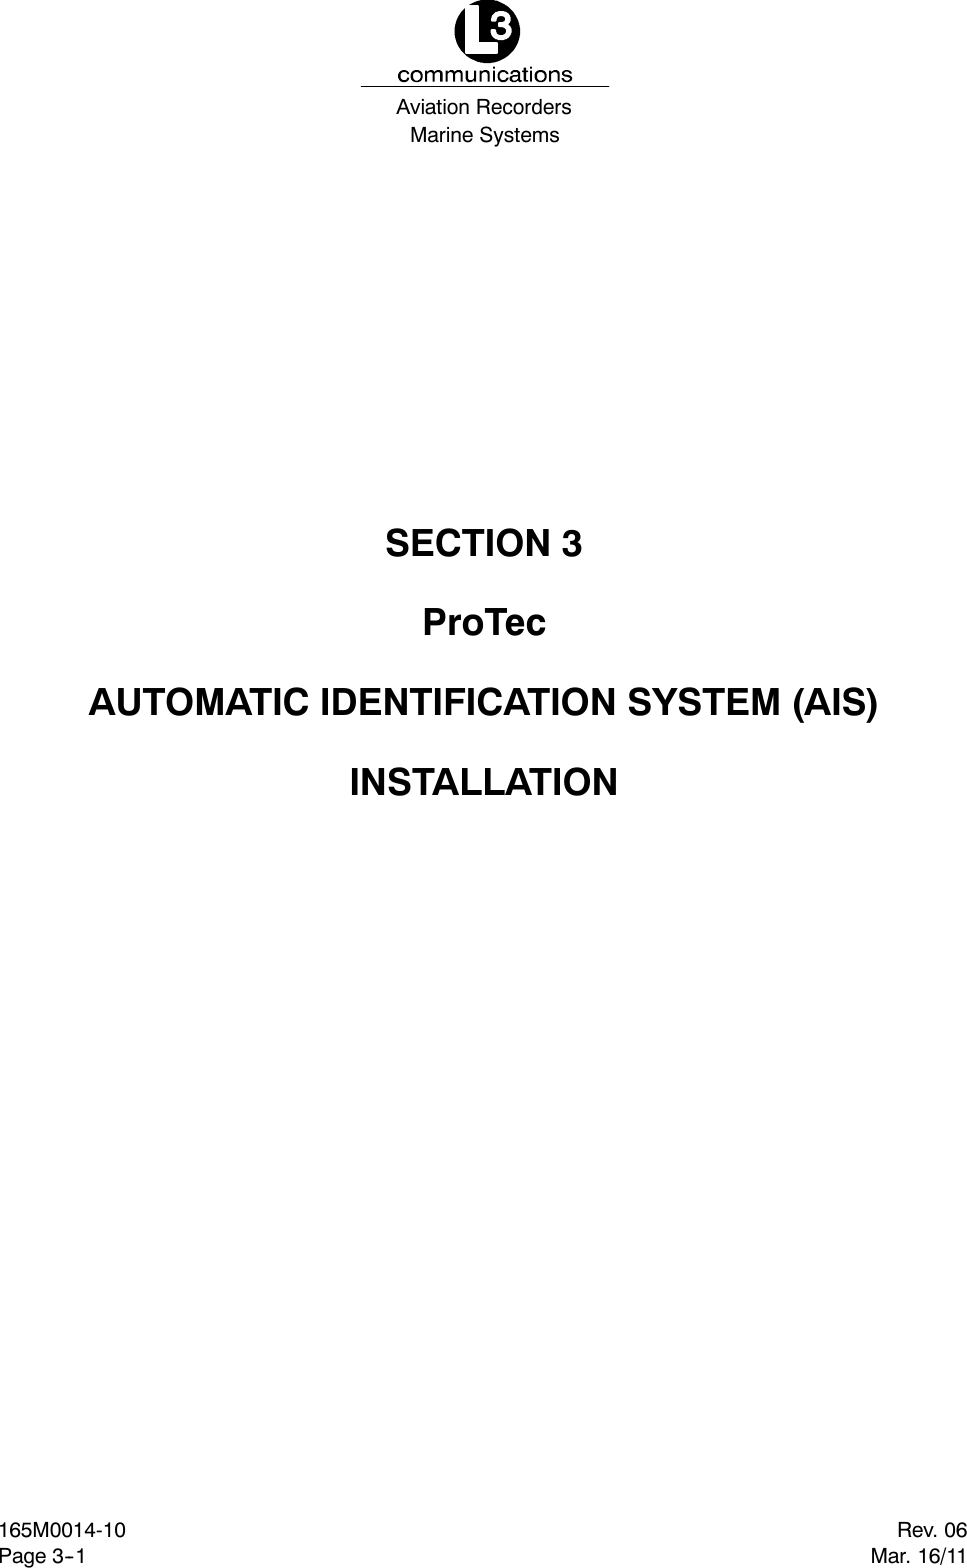 Marine SystemsAviation RecordersRev. 06Mar. 16/11165M0014-10Page 3--1SECTION 3ProTecAUTOMATIC IDENTIFICATION SYSTEM (AIS)INSTALLATION